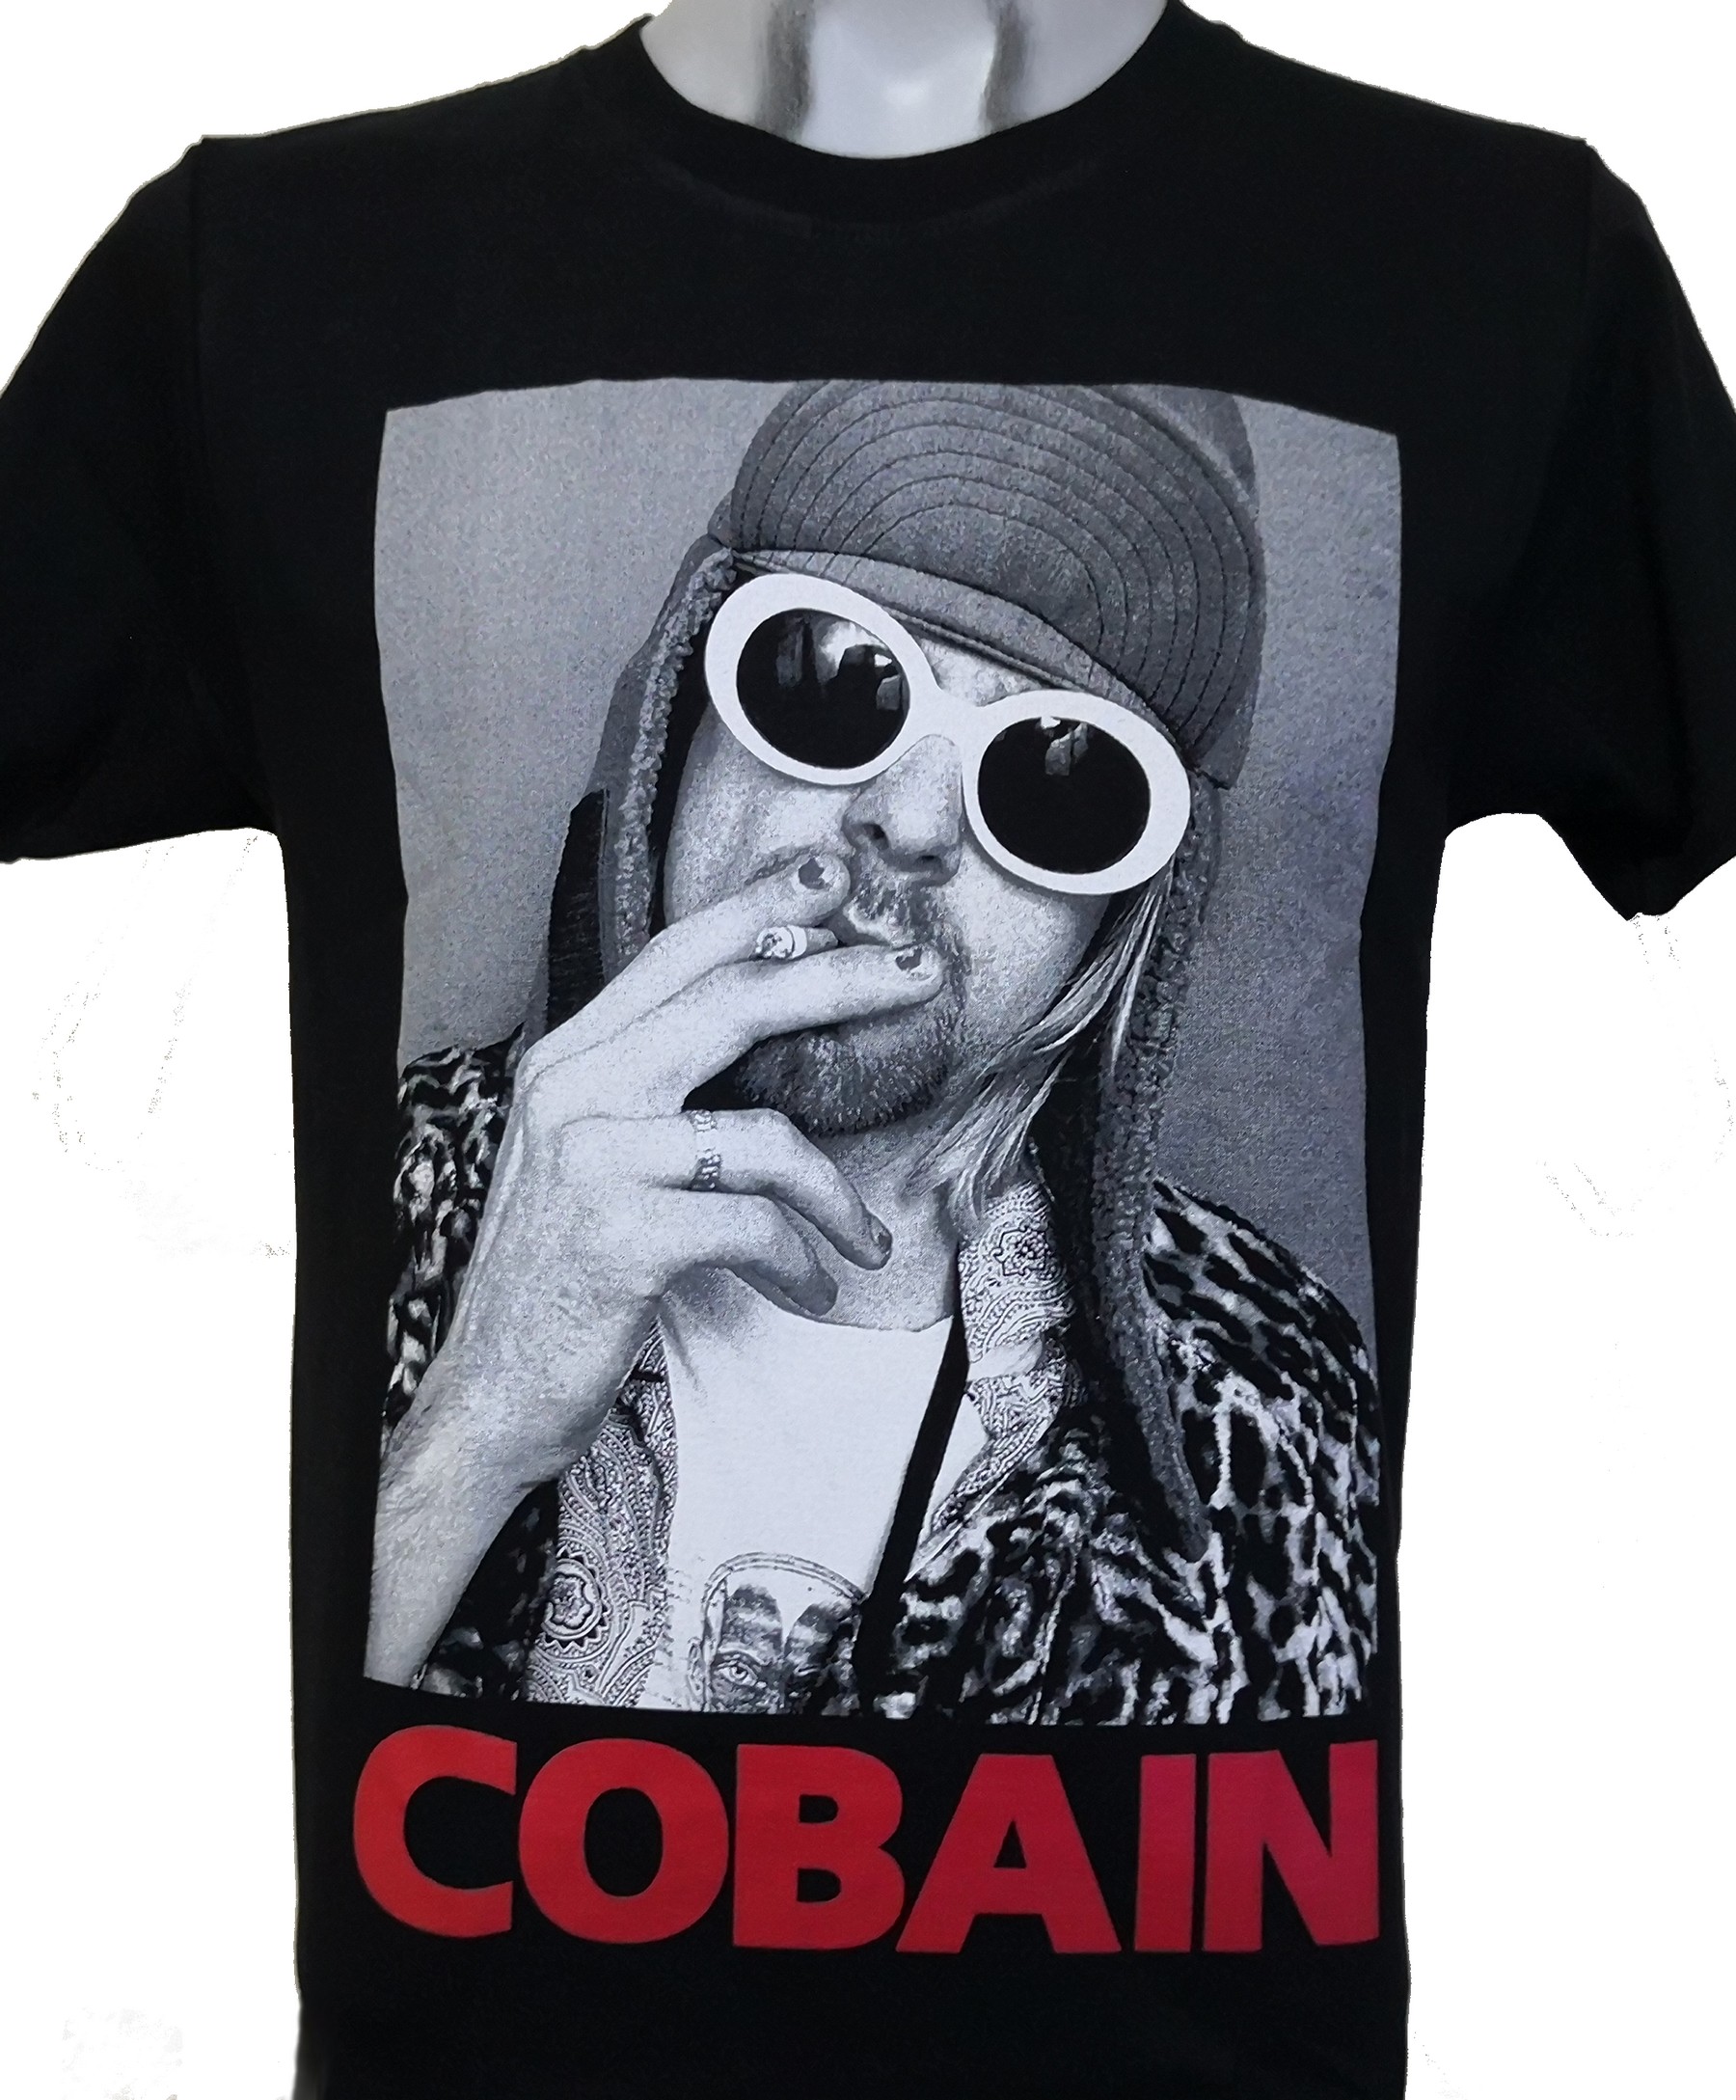 Kurt Cobain t-shirt size L – RoxxBKK